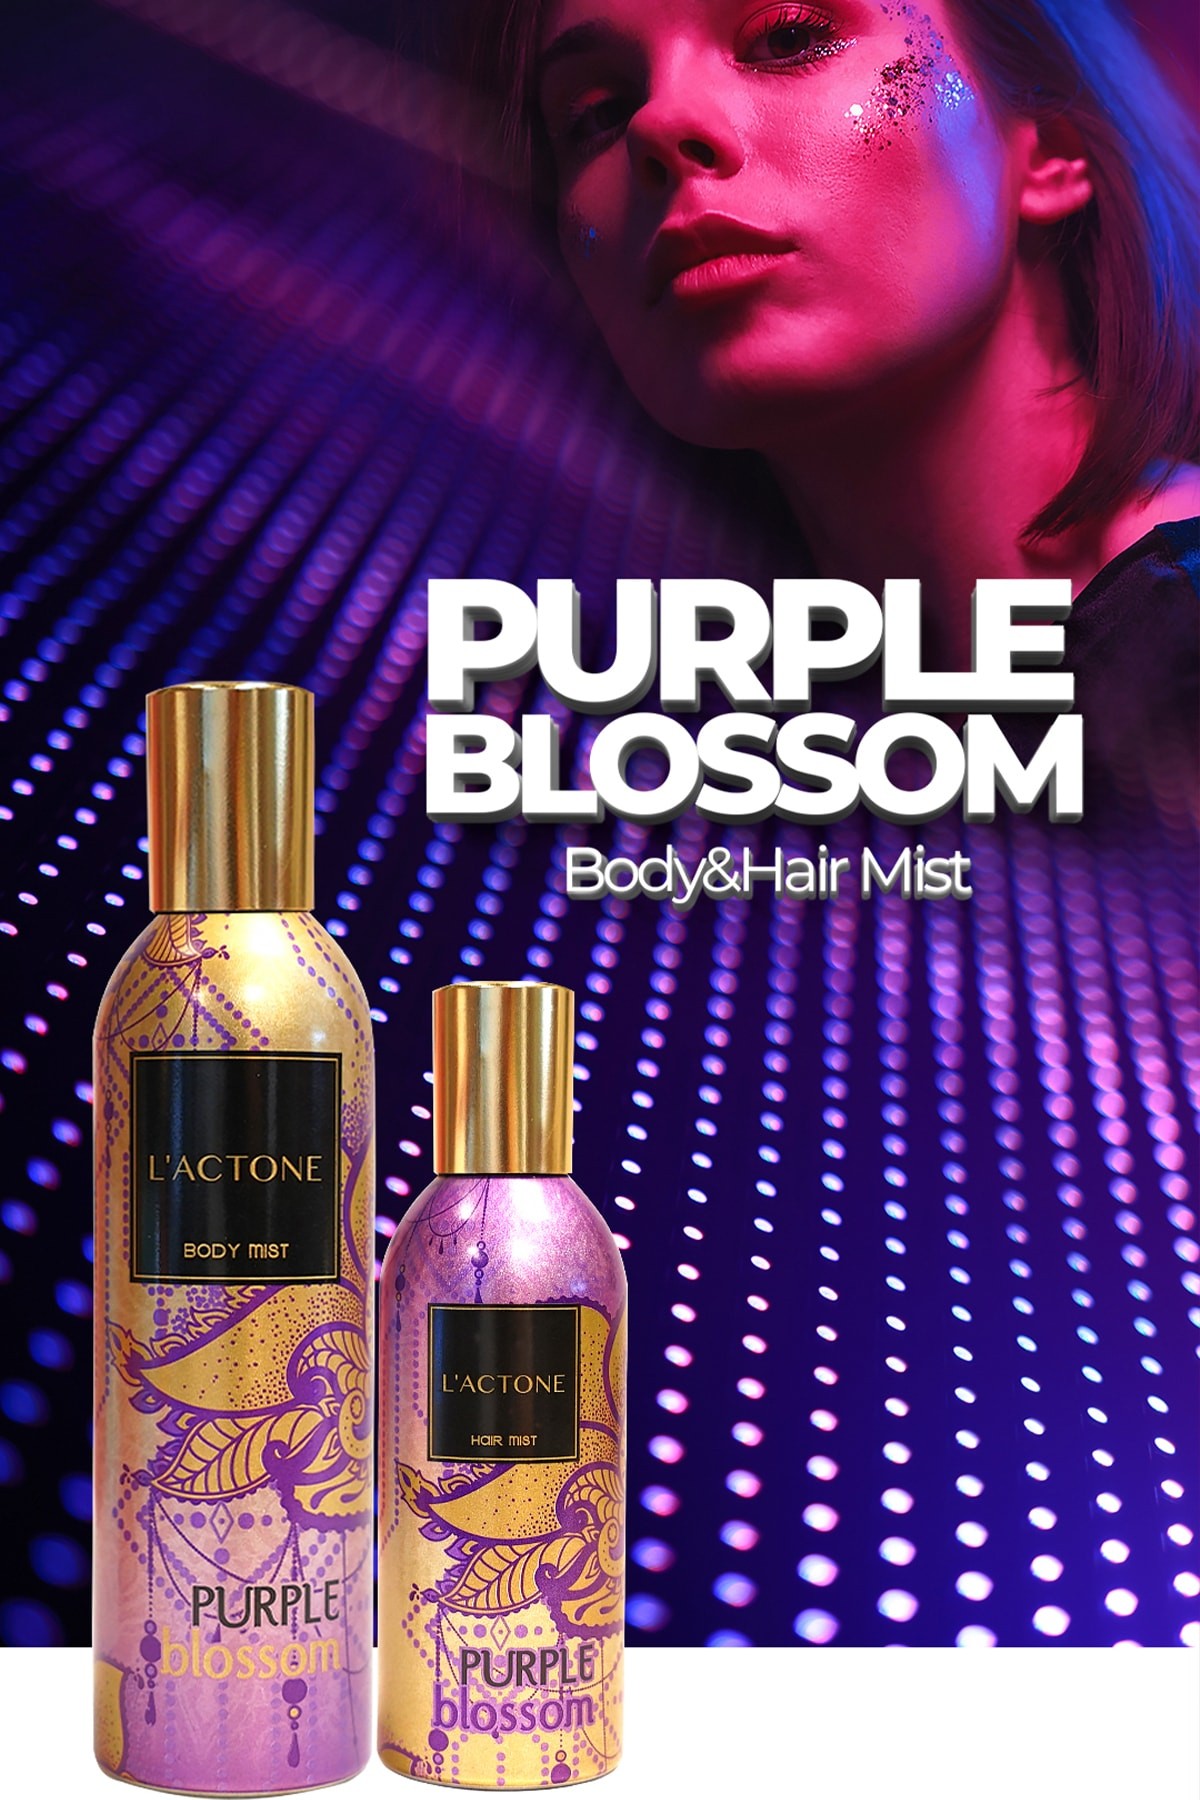 Purple Blossom Body Mist Vücut Spreyi Hair Mist Saç Spreyi 2'li Set